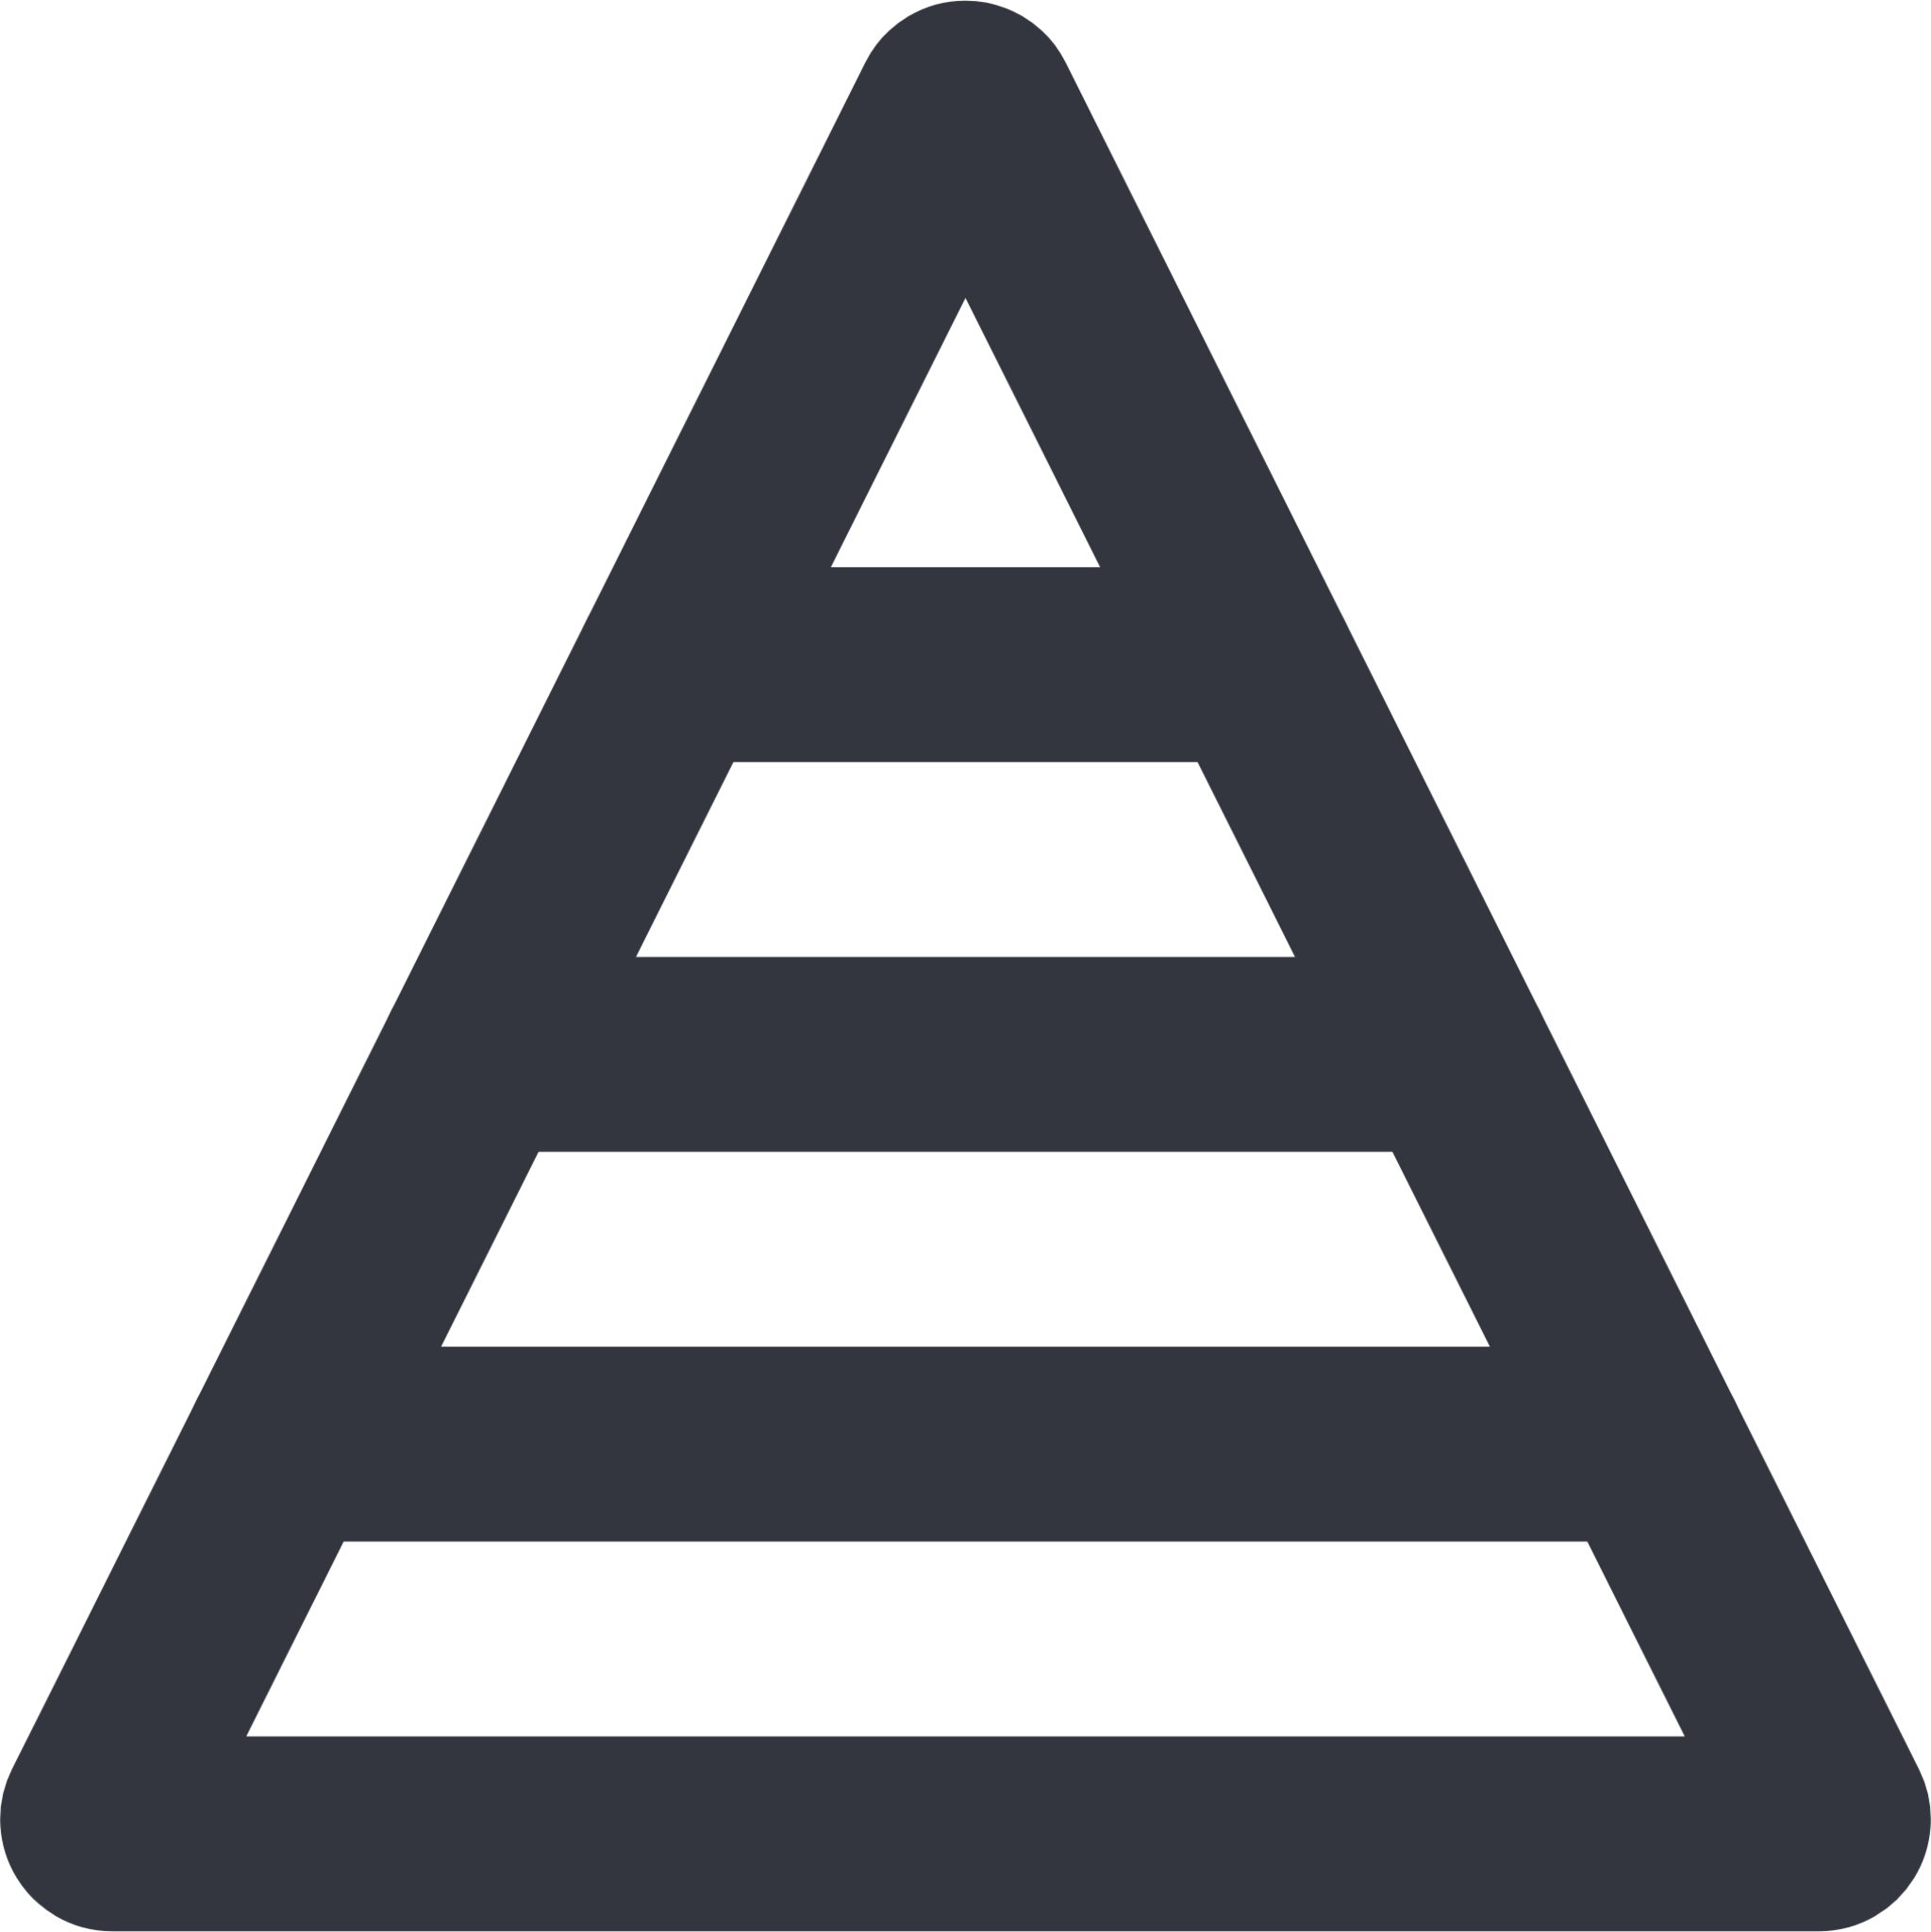 pyramid chart icon